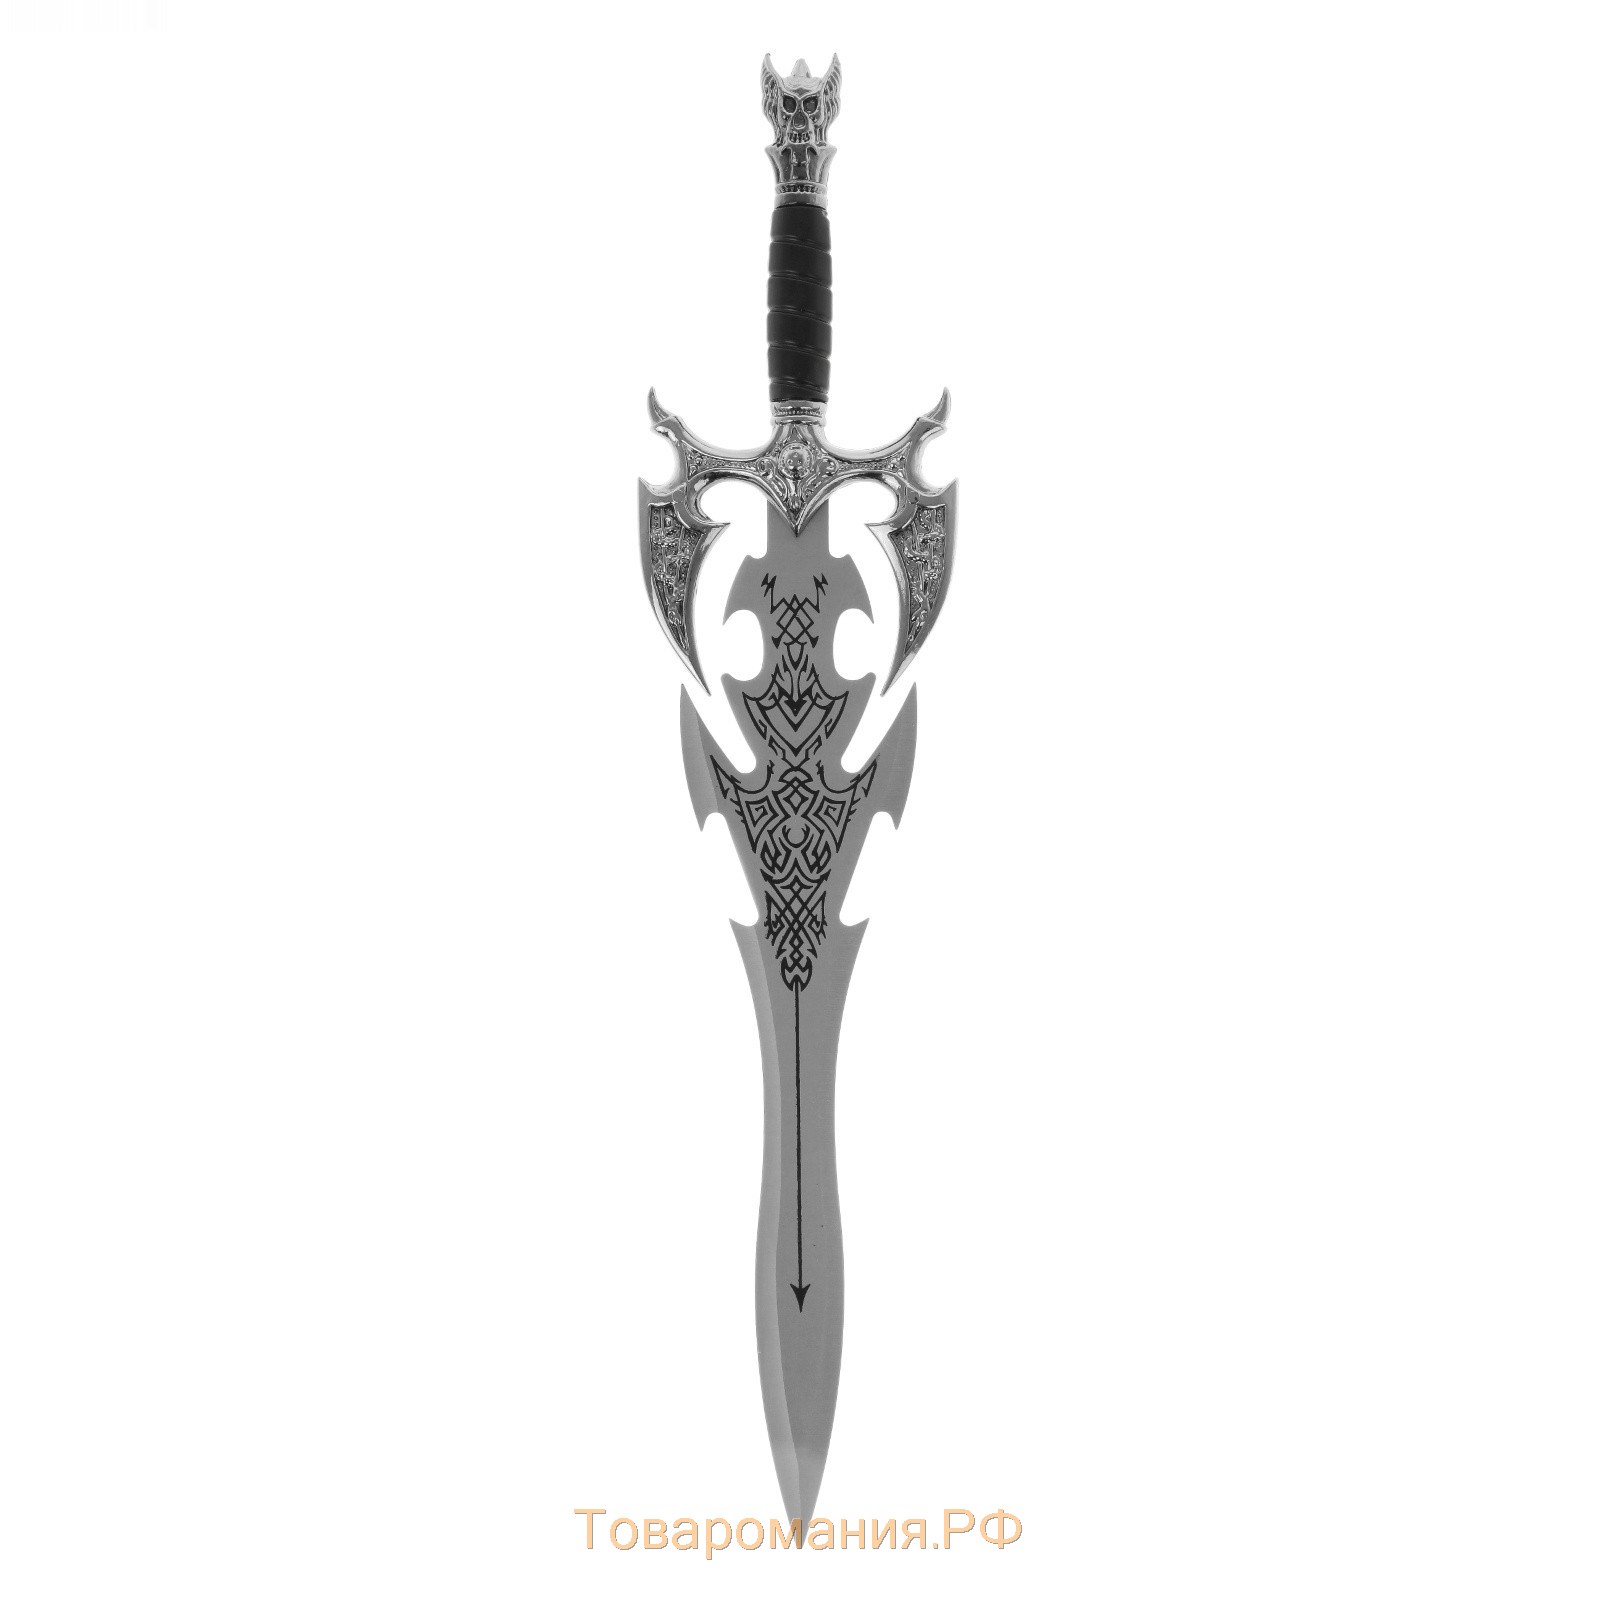 Сувенирный меч на планшете, змеи на уголках эфеса, 56 см